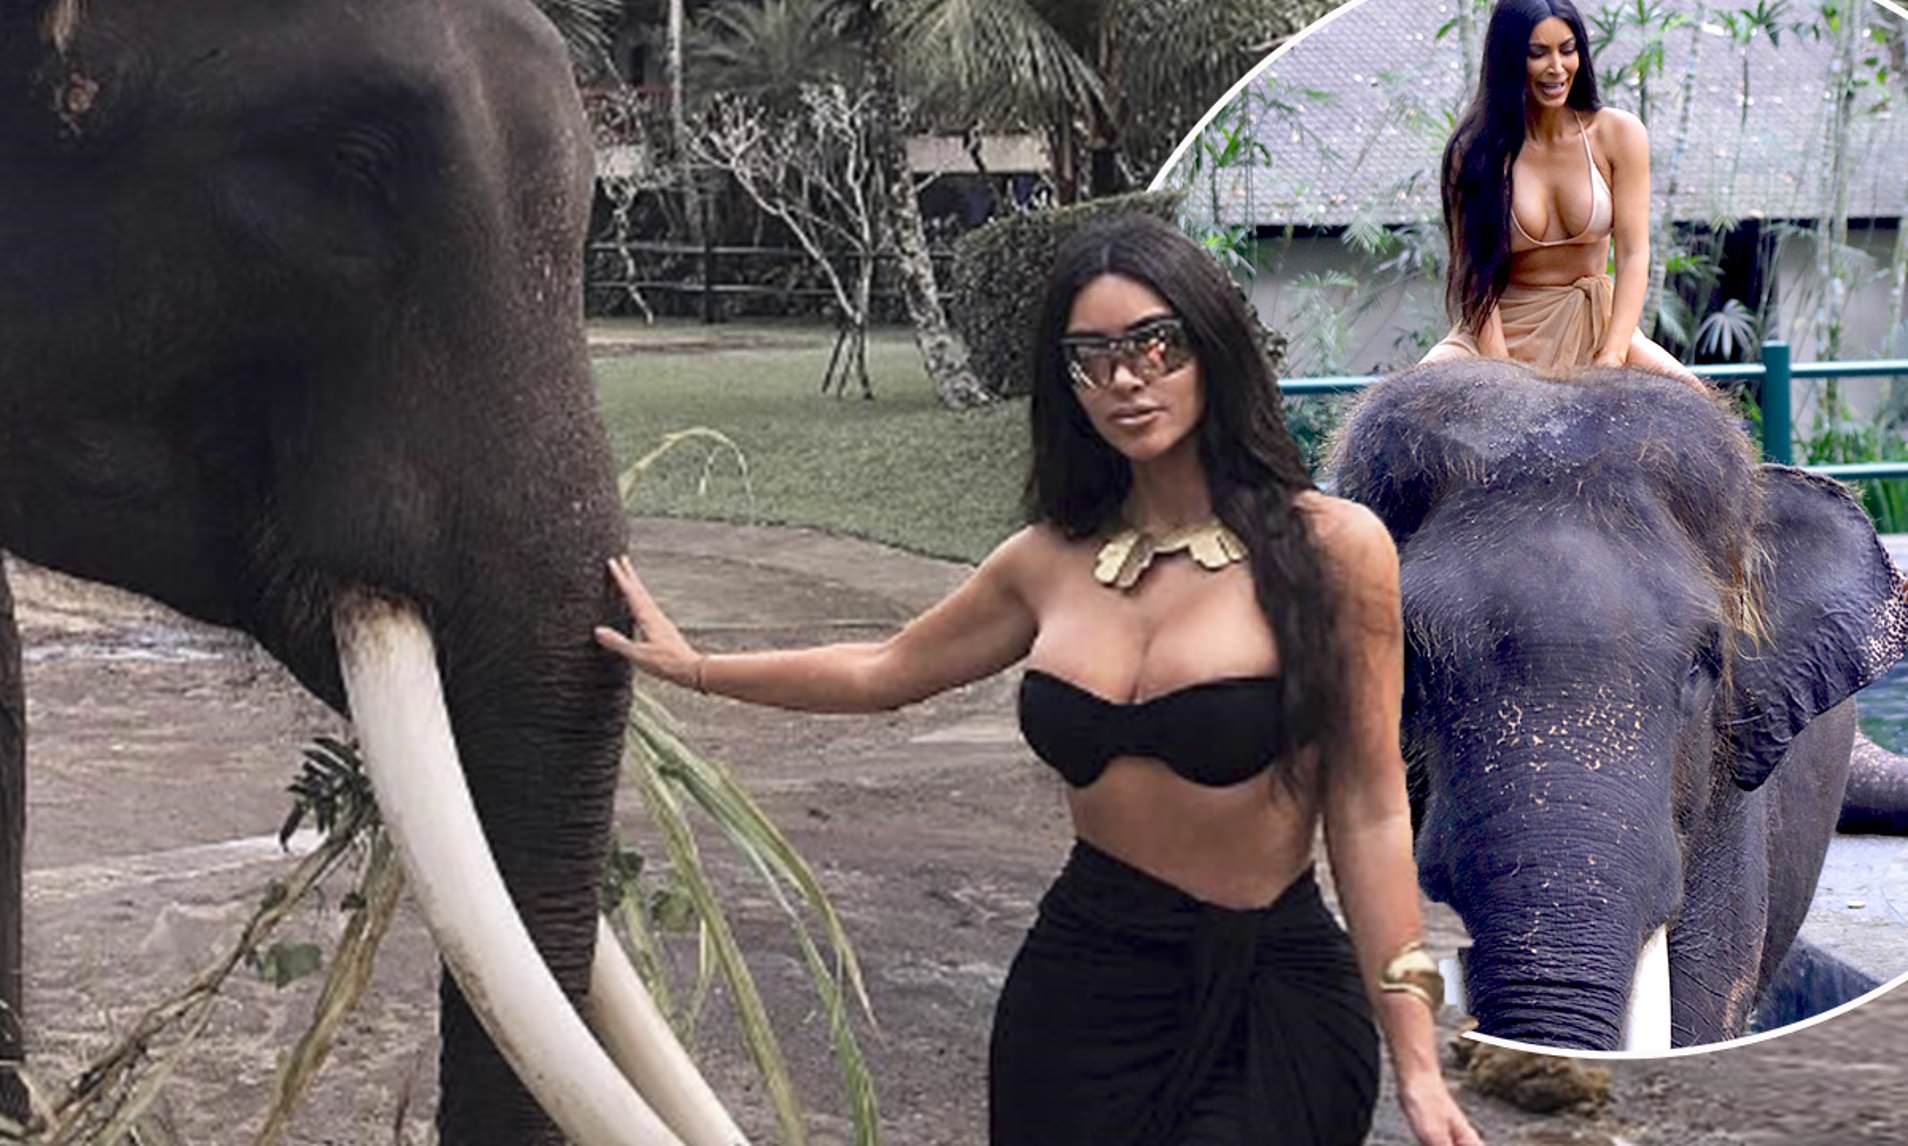 'That elephant looks so sad': Vegans slam Kim Kardashian for posing with a rescue animal on a luxury holiday in Bali